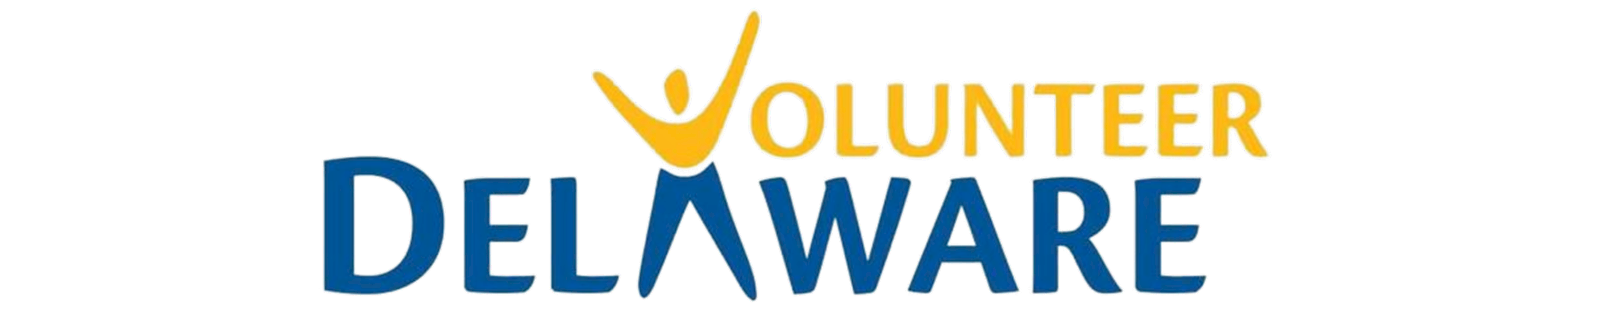 Volunteer Delaware 50+ logo